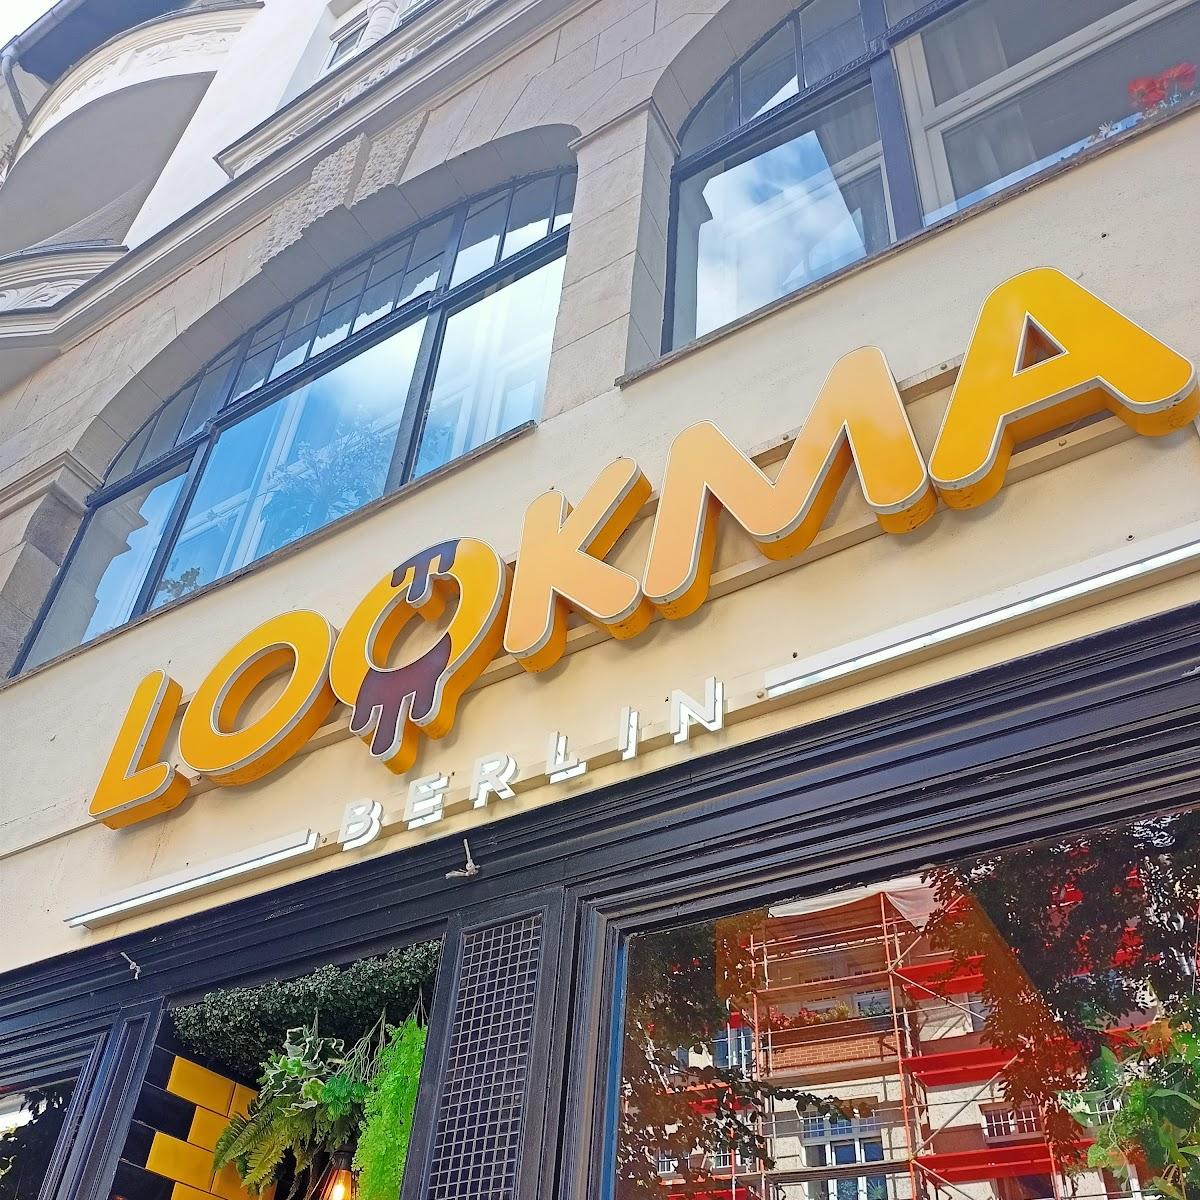 Restaurant "Lookma  Steglitz" in Berlin